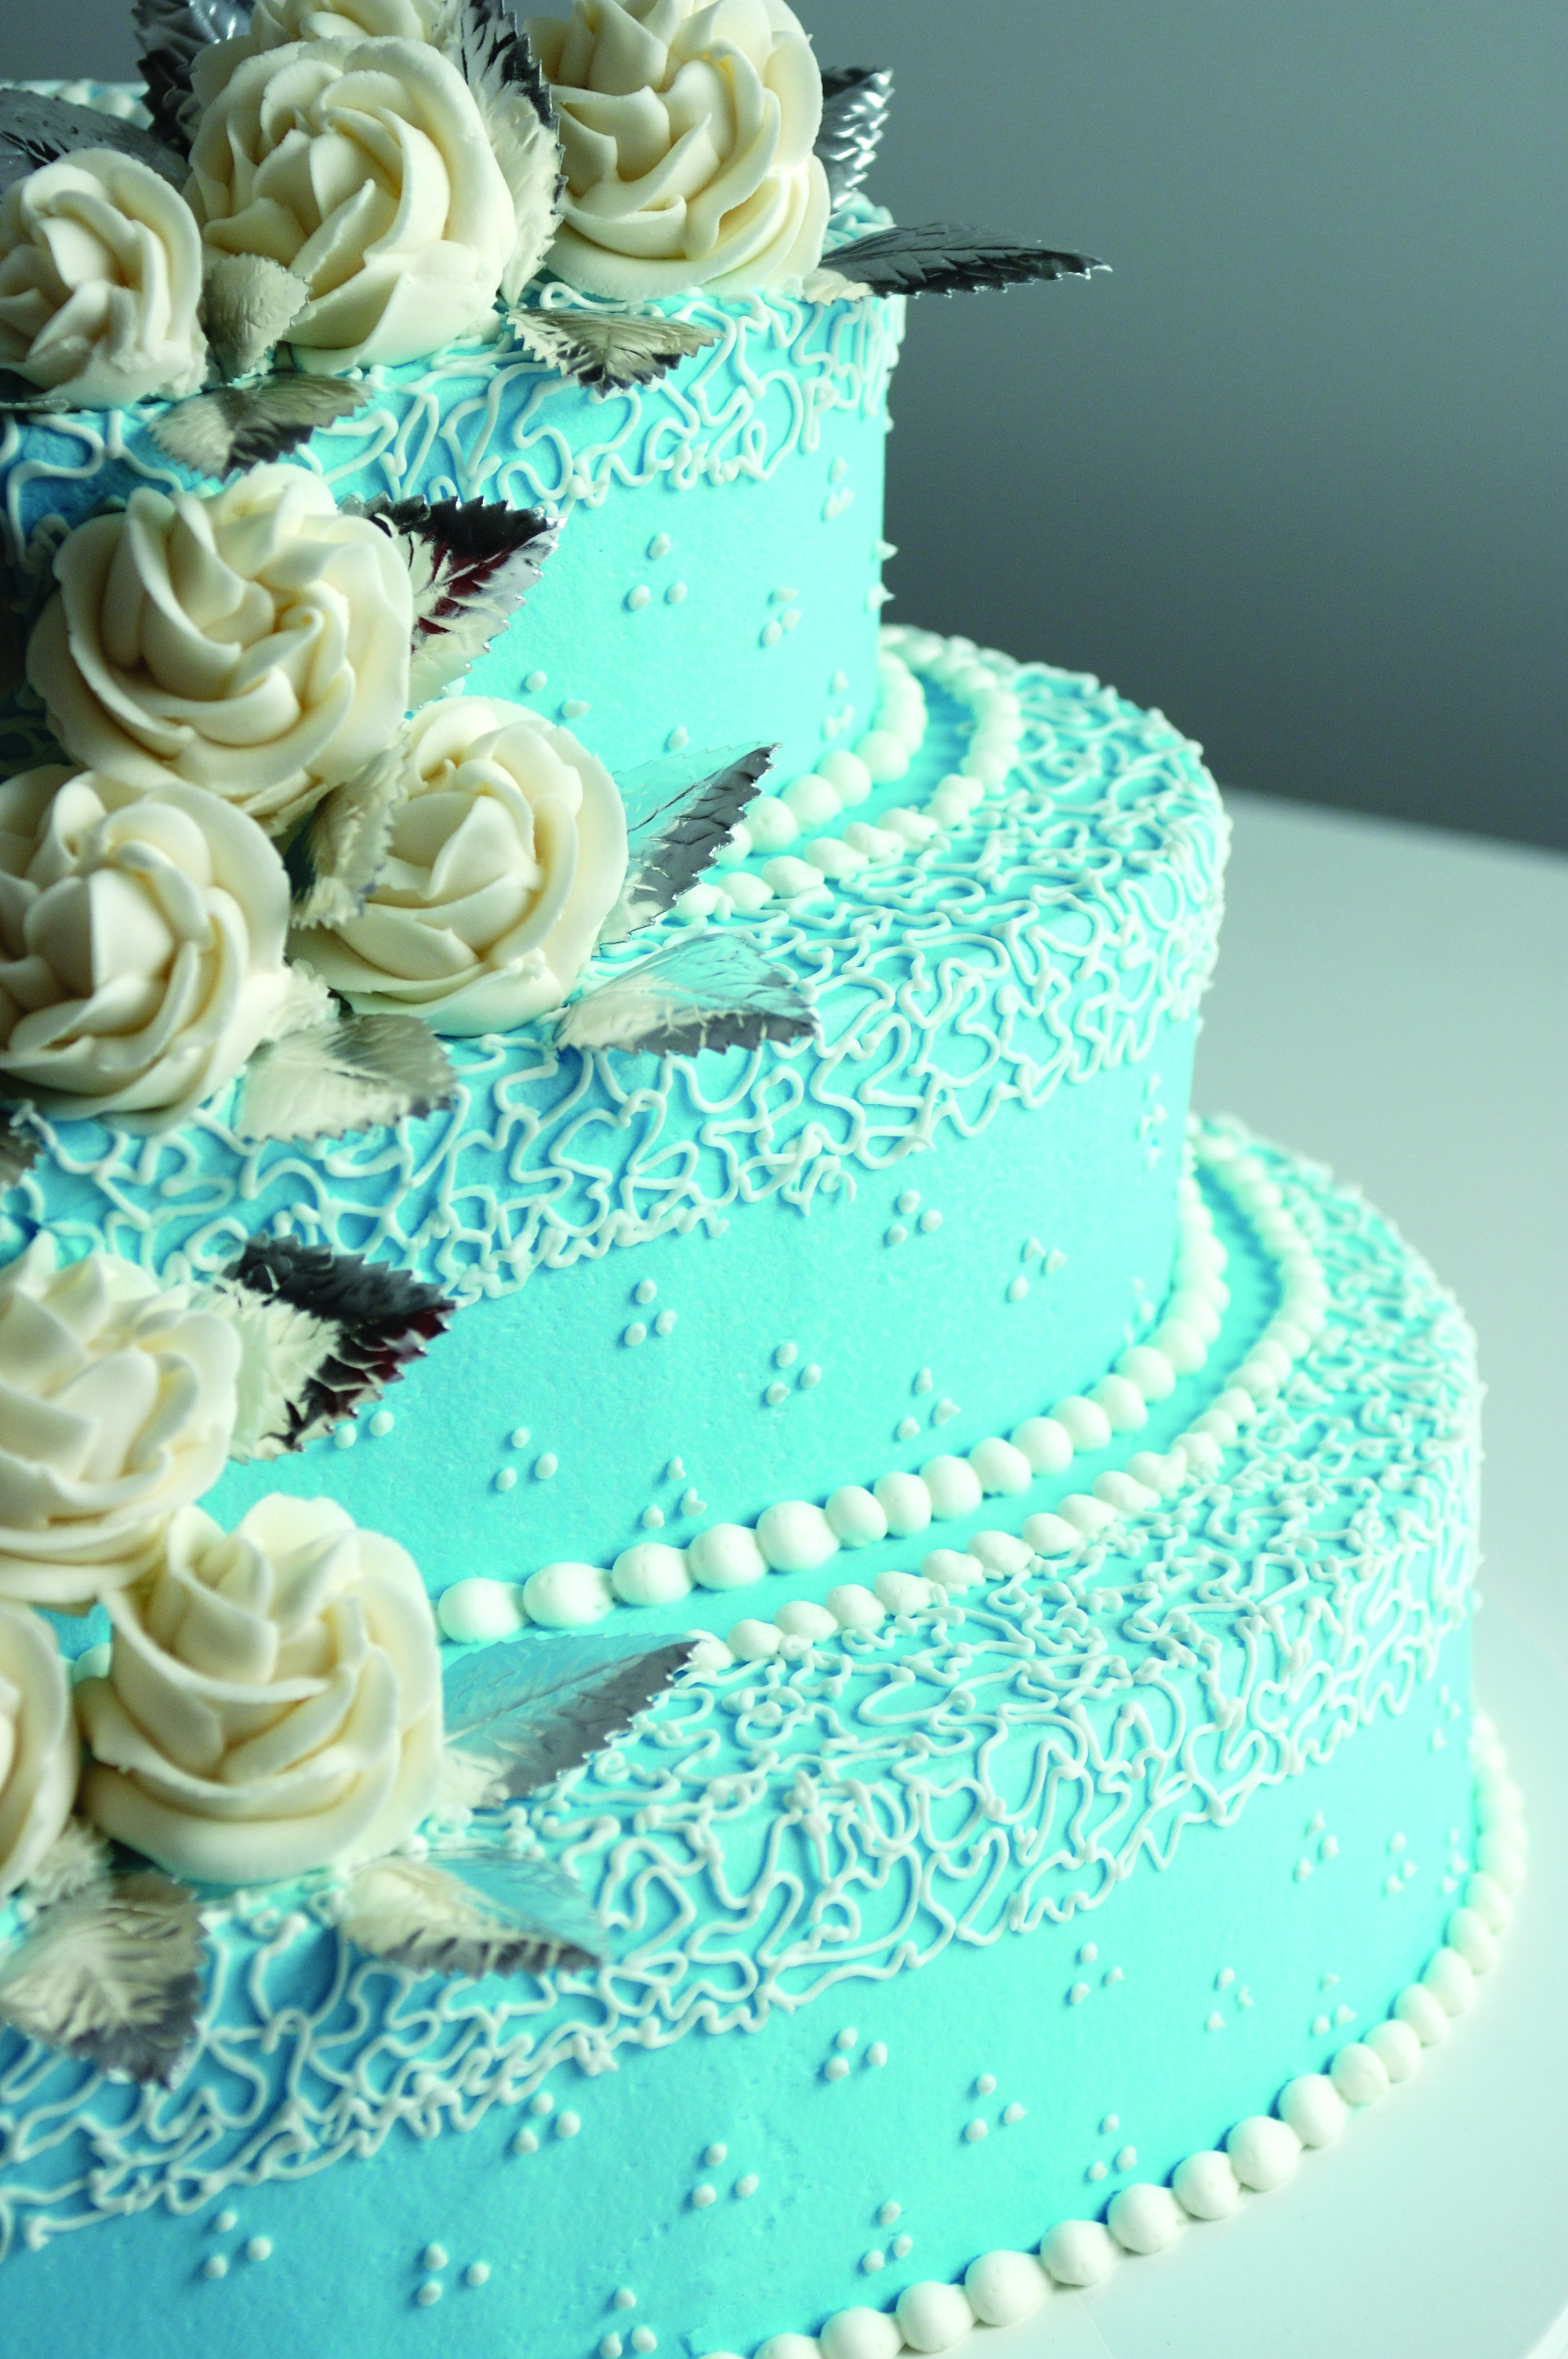 Ukrops Wedding Cakes Ukrops wedding cakes idea in 2017. ukrops wedding cake...